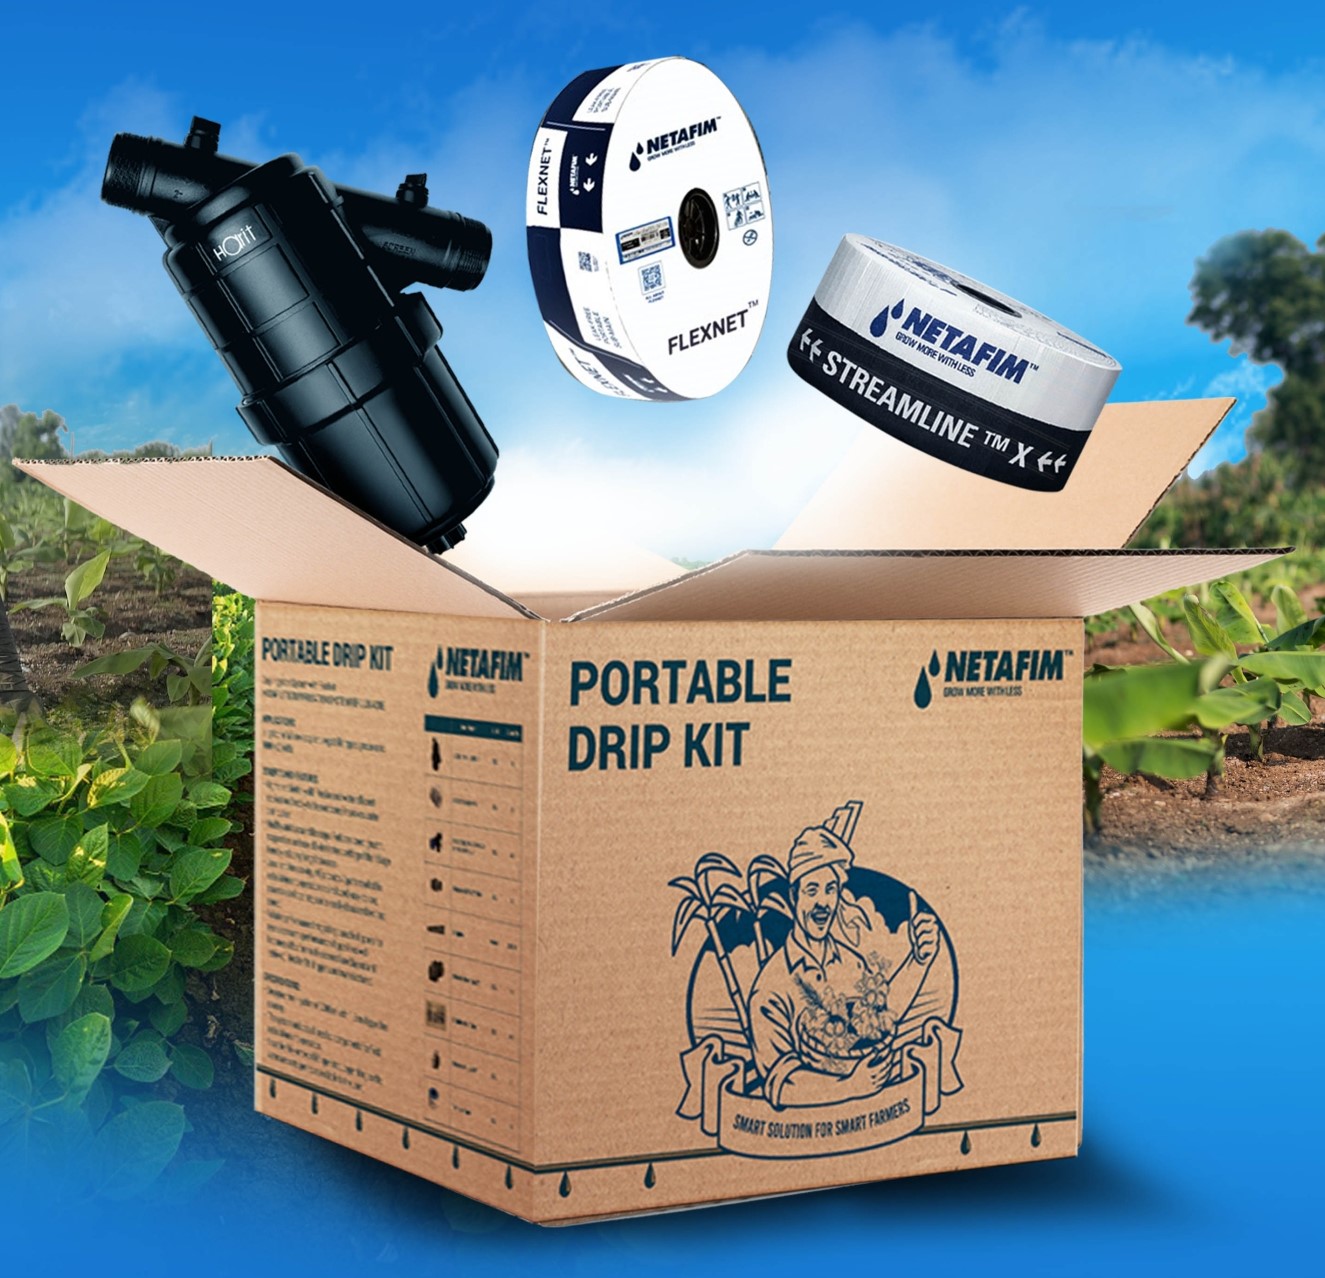 Netafim India Introduces Revolutionary Portable Drip Kit for Today’s Farmer decoding=